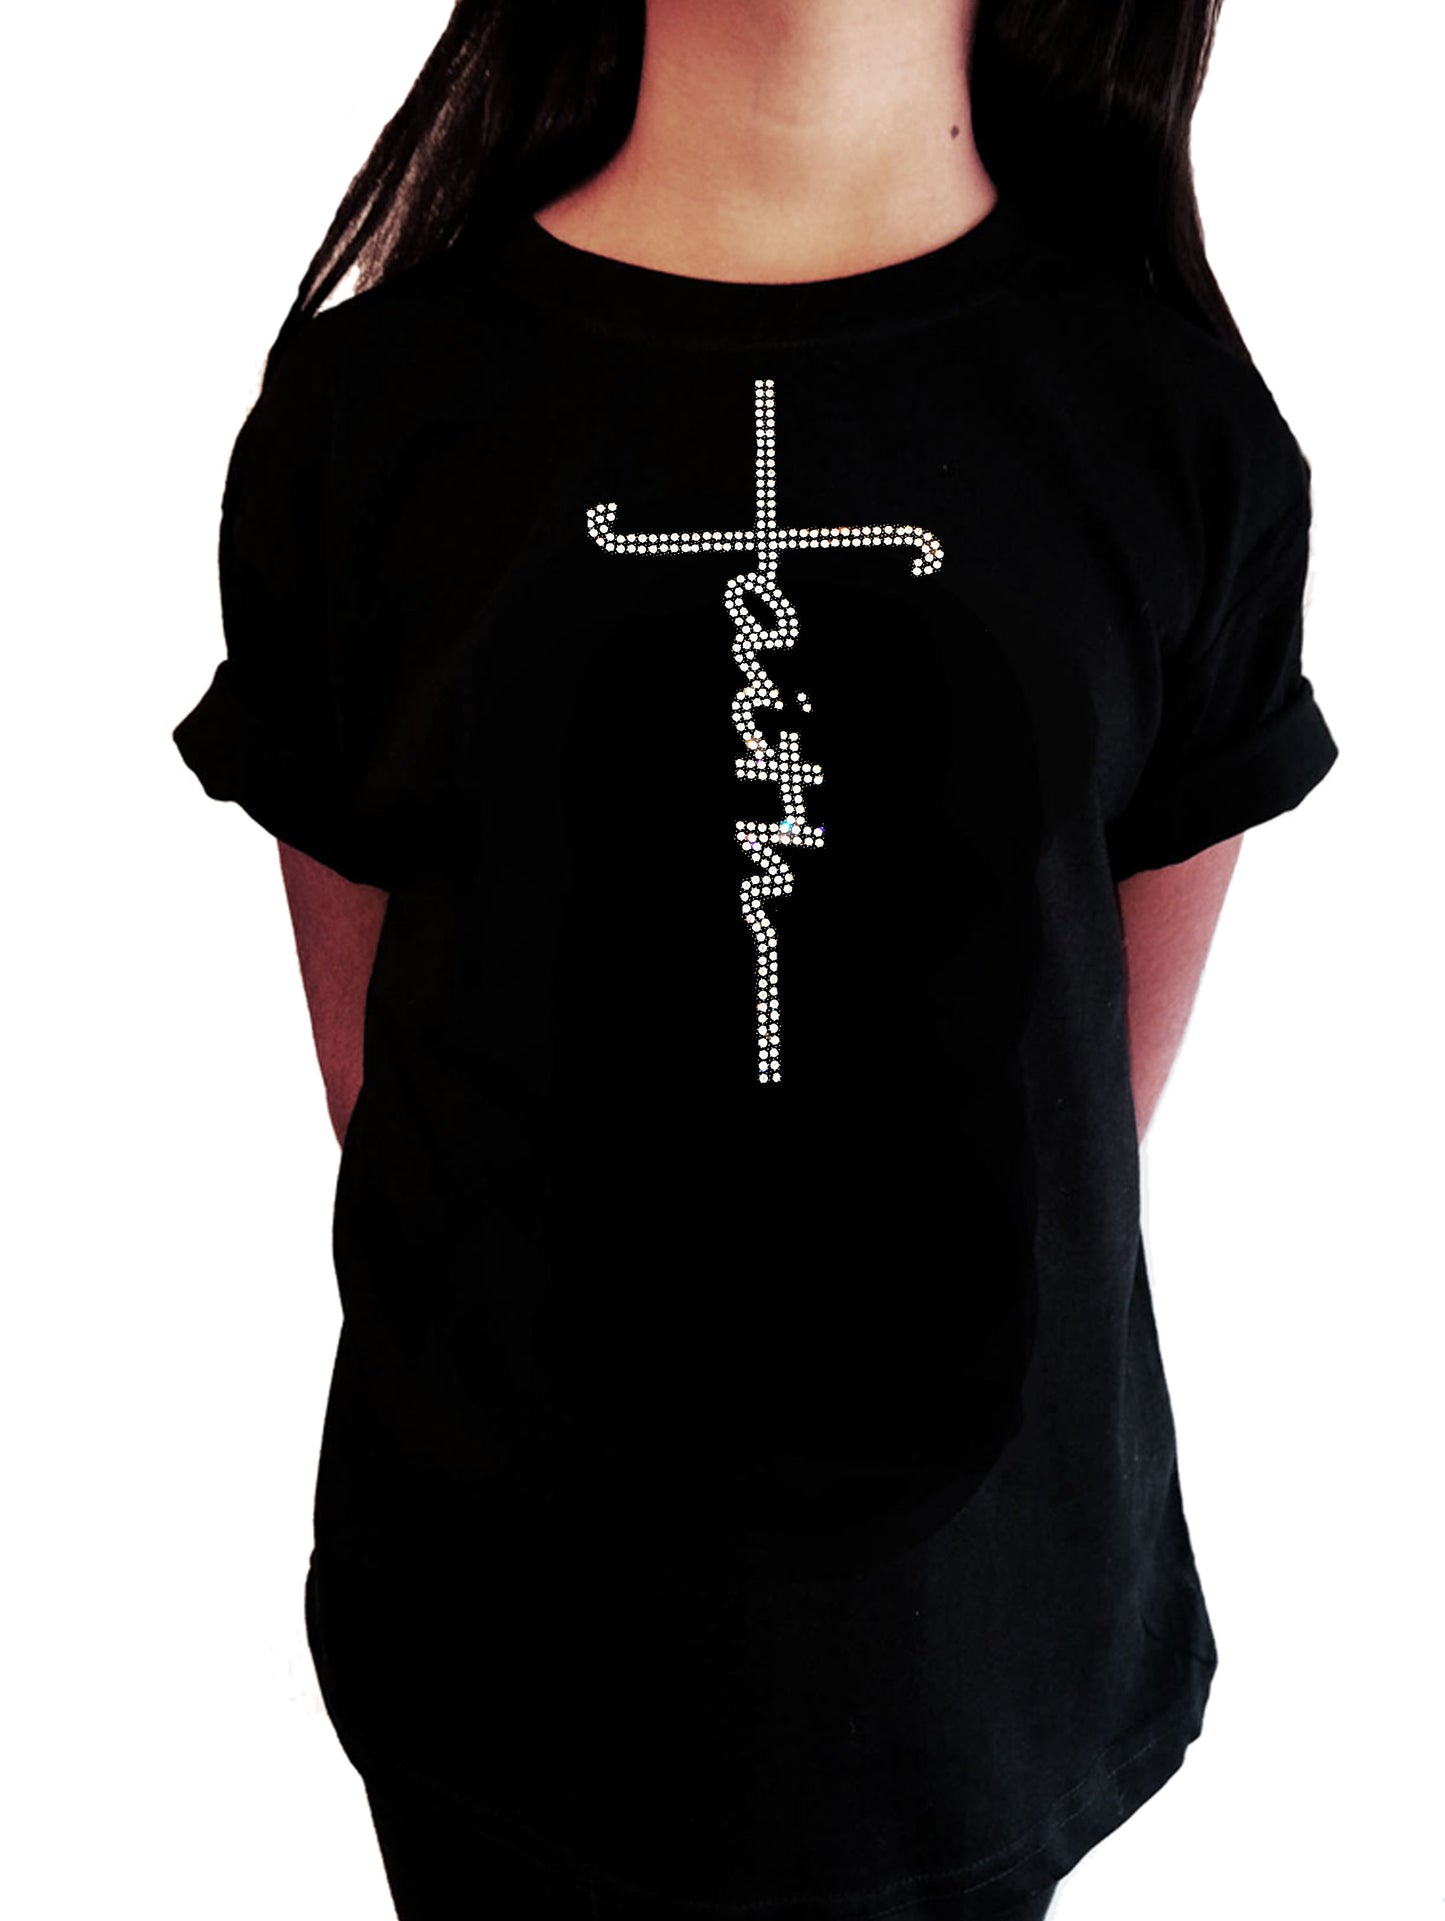 Girls Rhinestone T-Shirt " Faith Script Cross in Rhinestones " Kids Size 3 to 14 Available